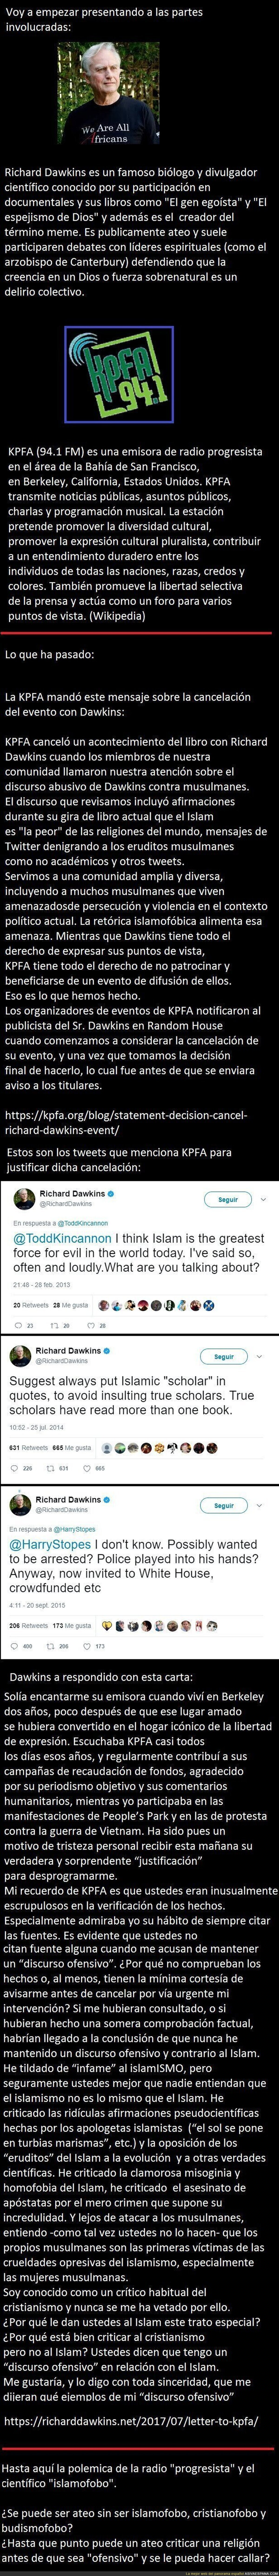 Richard Dawkings, ¿islamófobo o ateo crítico?